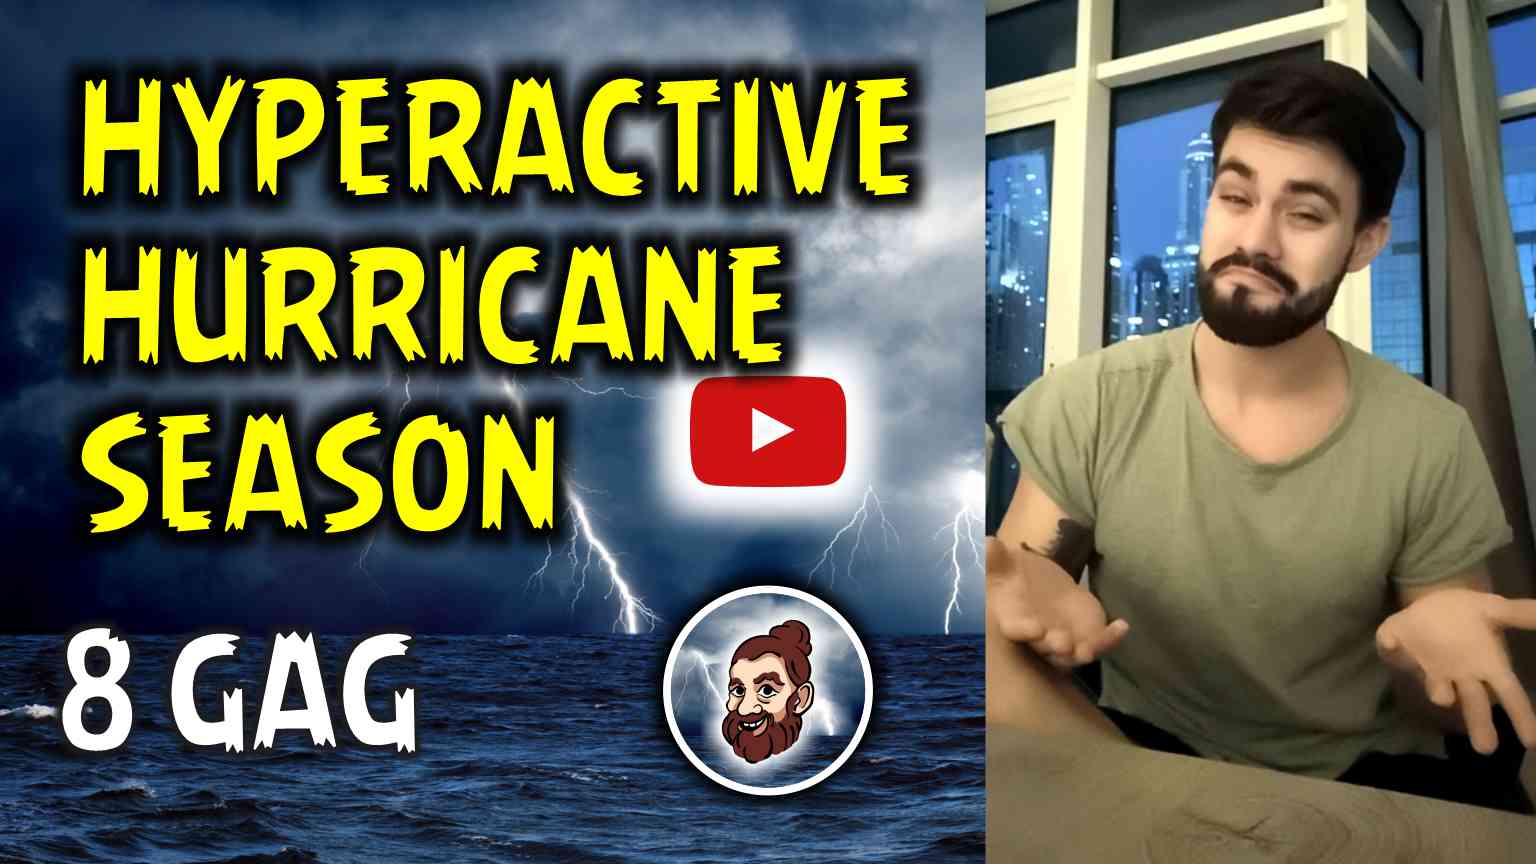 Hyperactive hurricane season